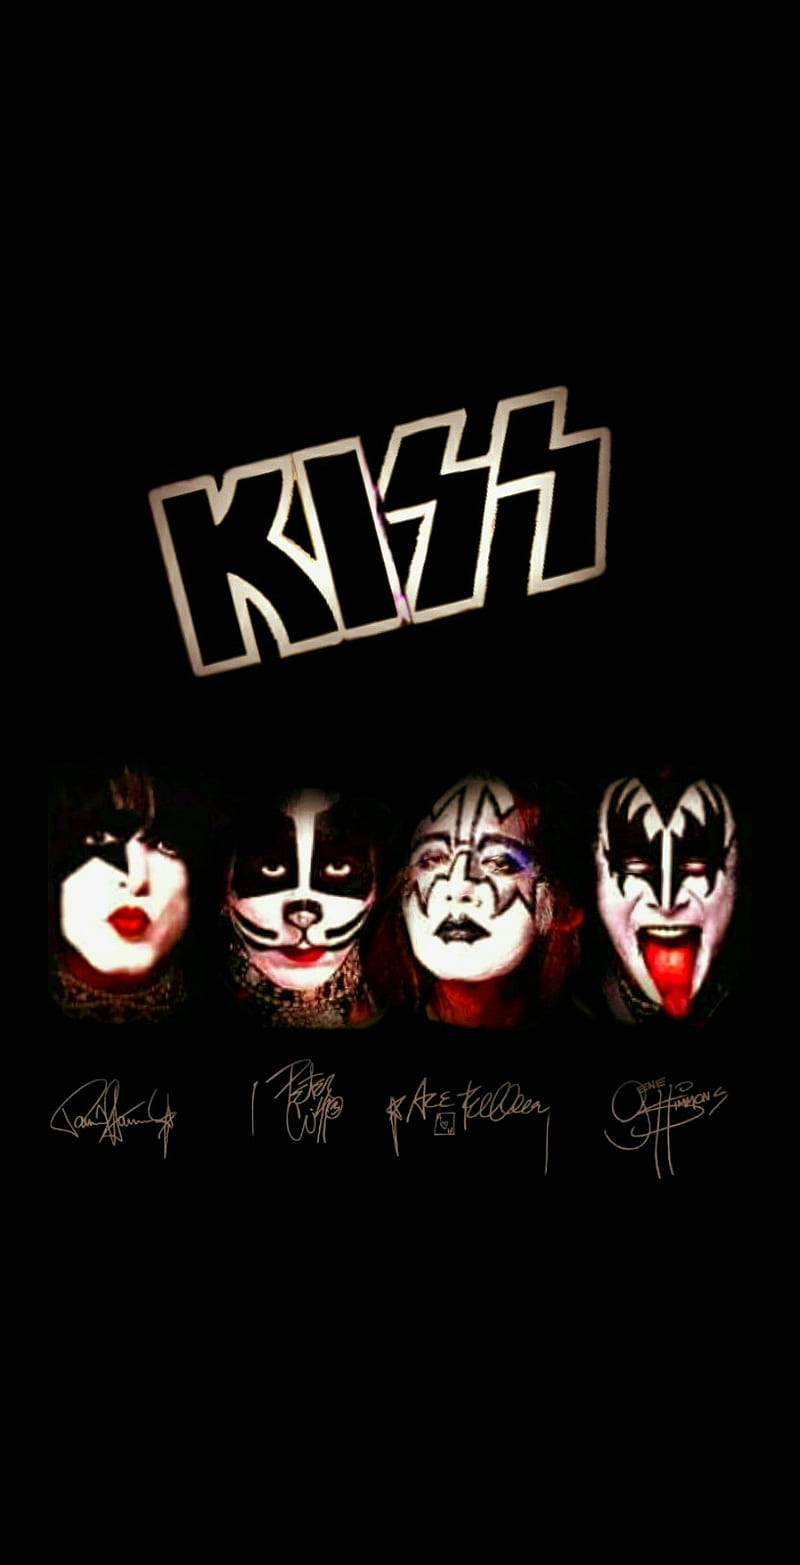 Kiss band, band, band, kiss, metal